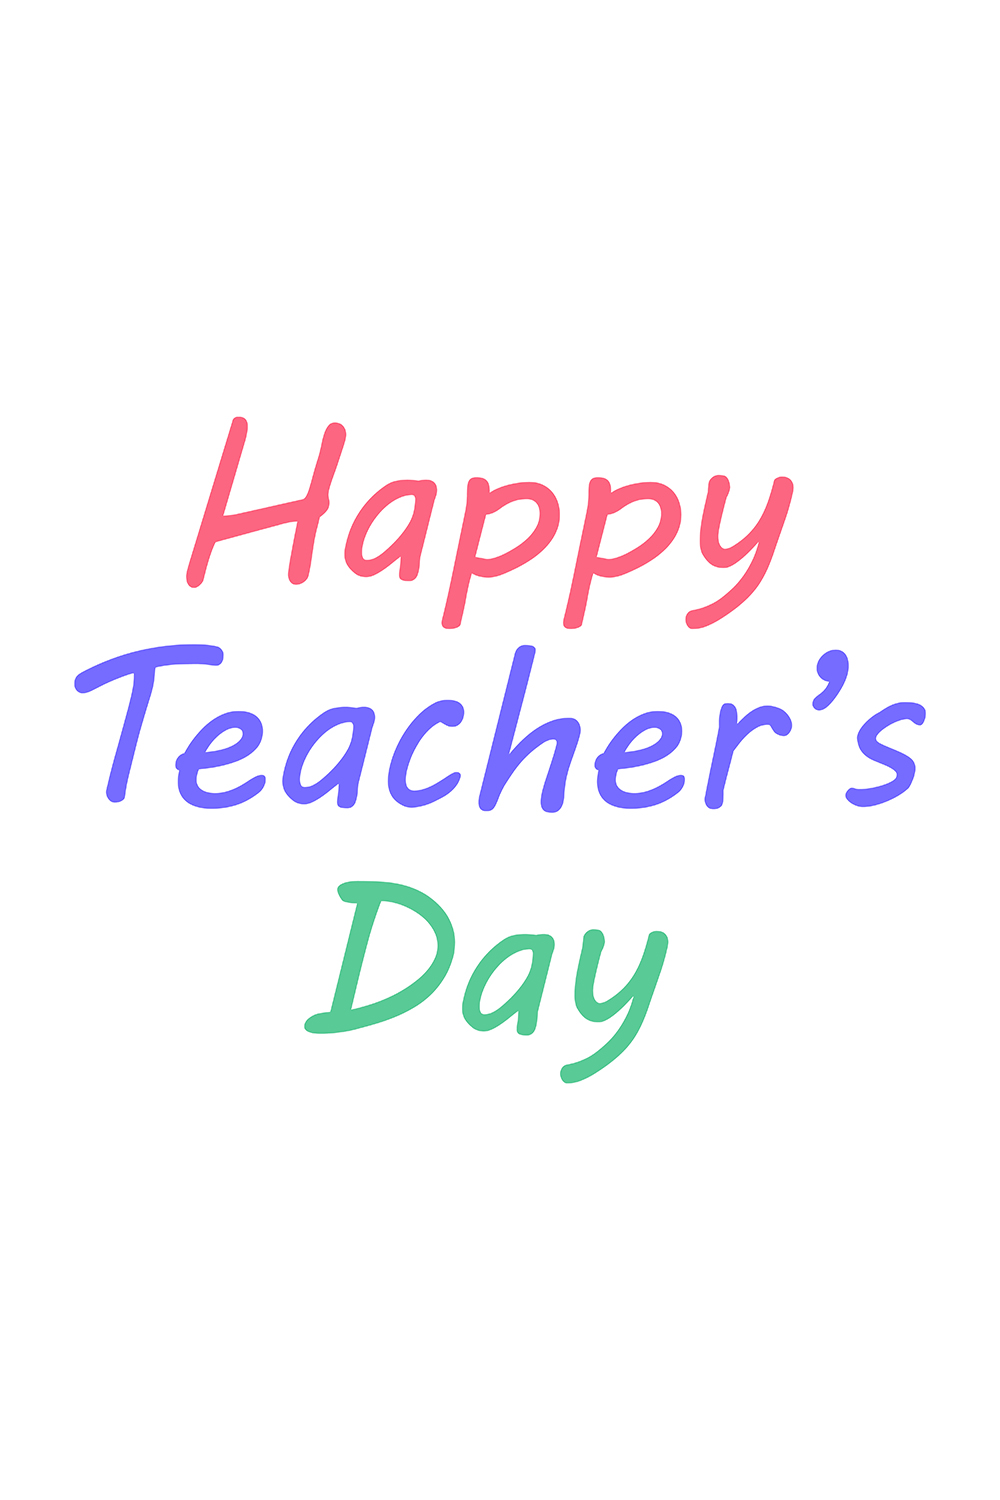 Happy Teacher's Day design 3 templates pinterest preview image.